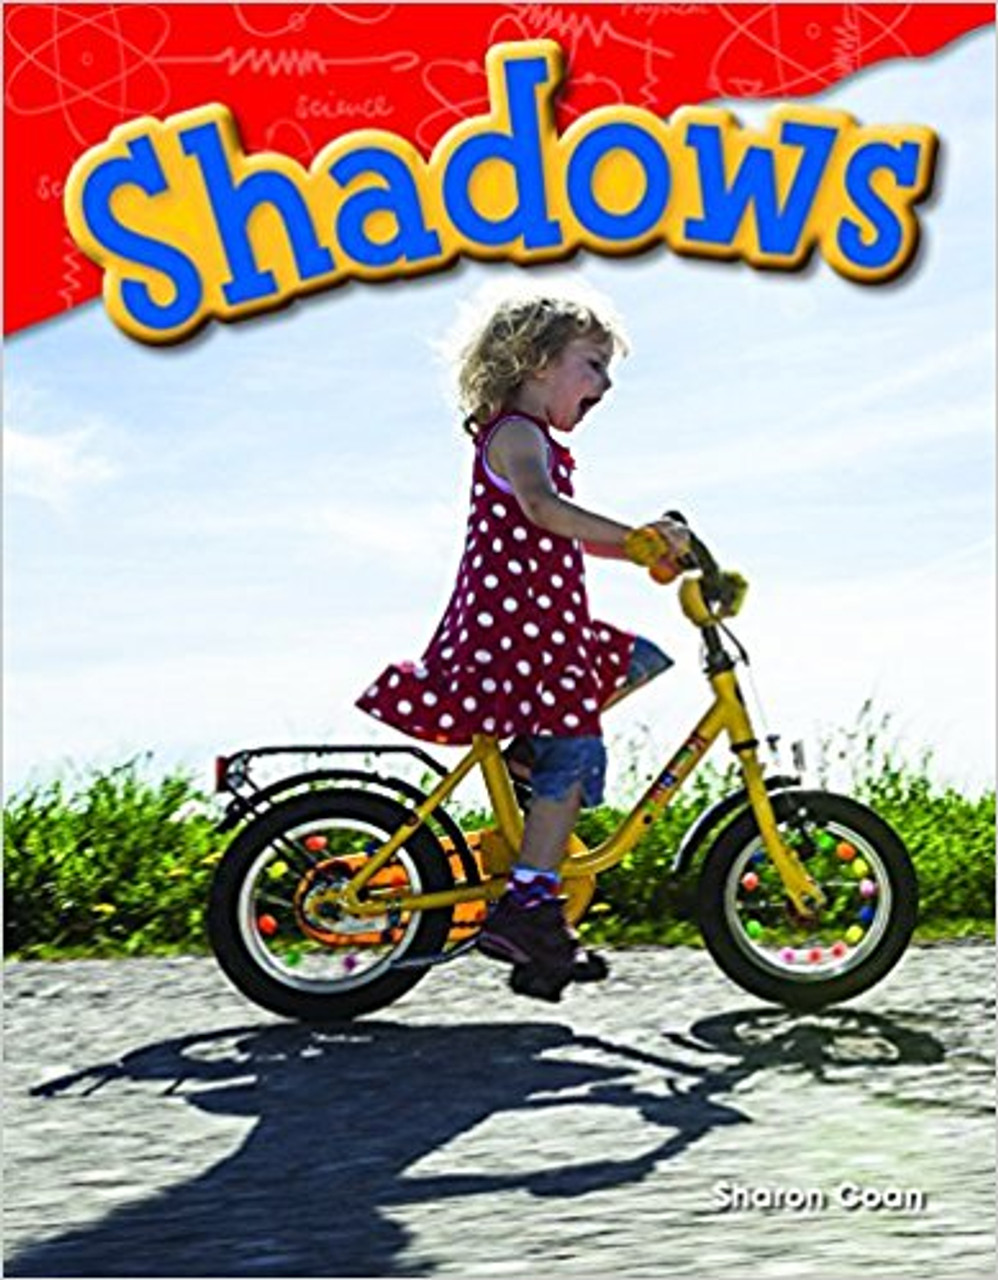 Shadows by Sharon Coan